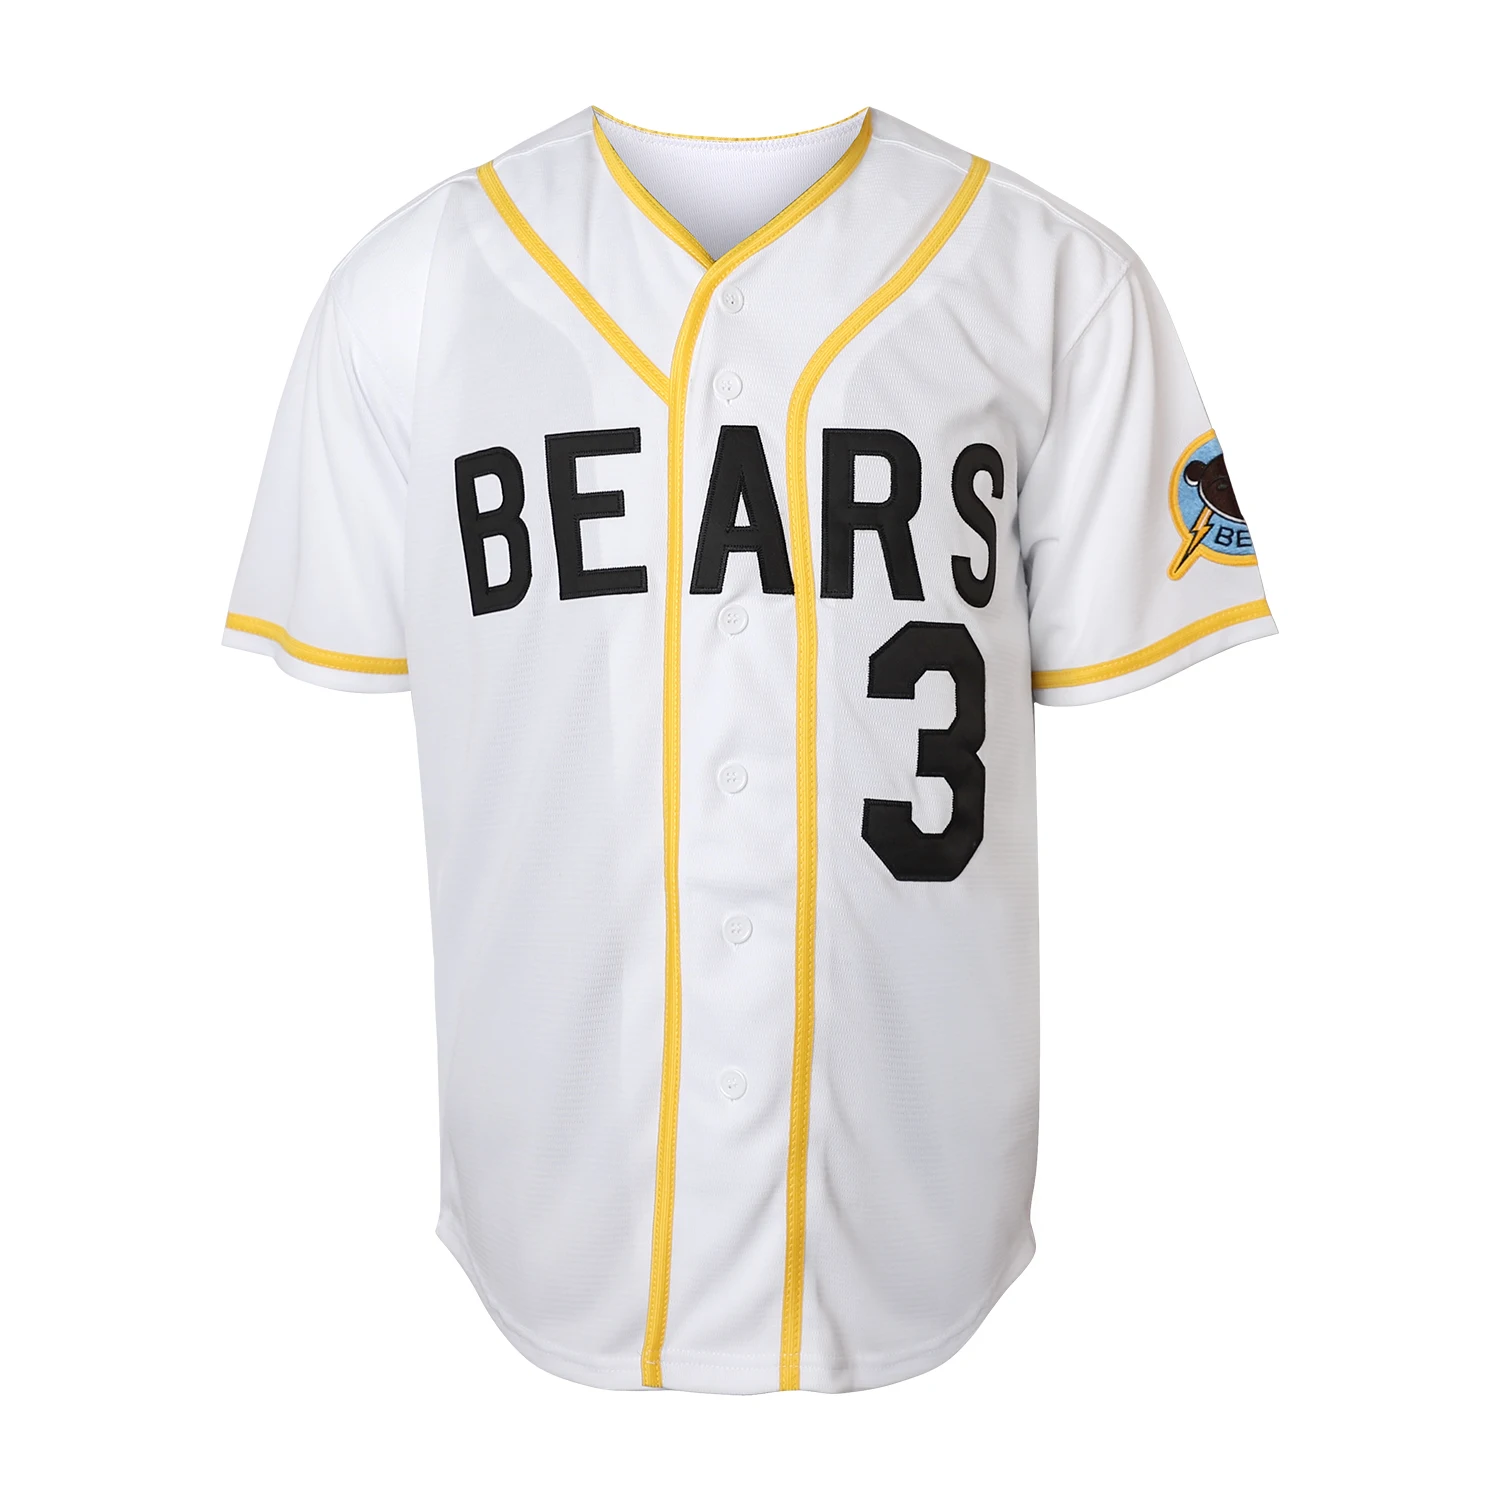 Bare Down Bones Baseball Jersey, Camisa branca, Filme Jersey costurado, 3 vazamento, 12 Tanner Boyle, #12